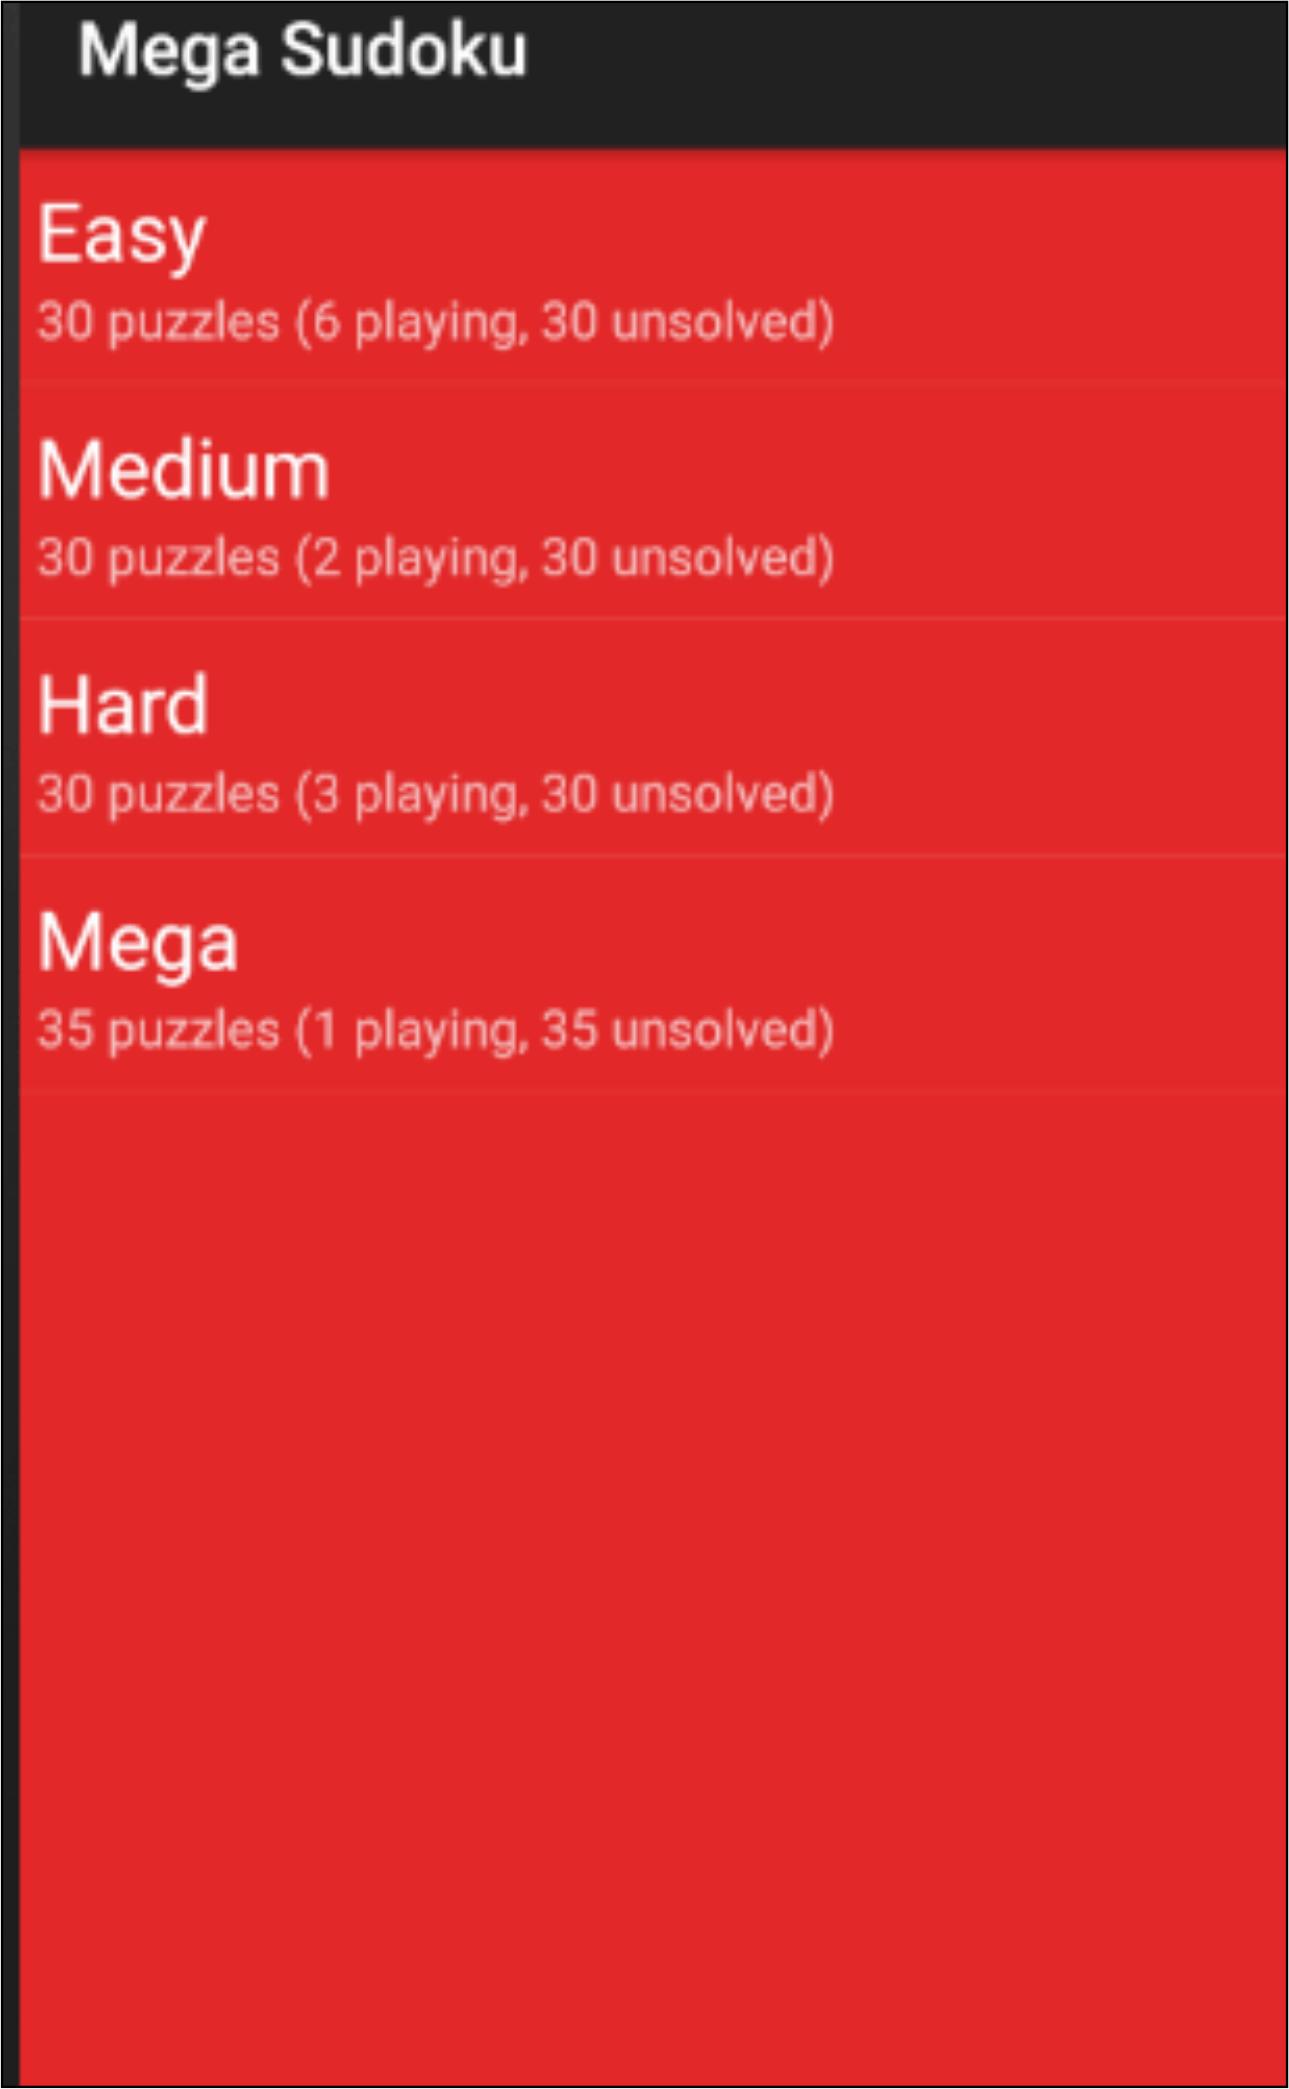 Mega Sudoku for Android - APK Download